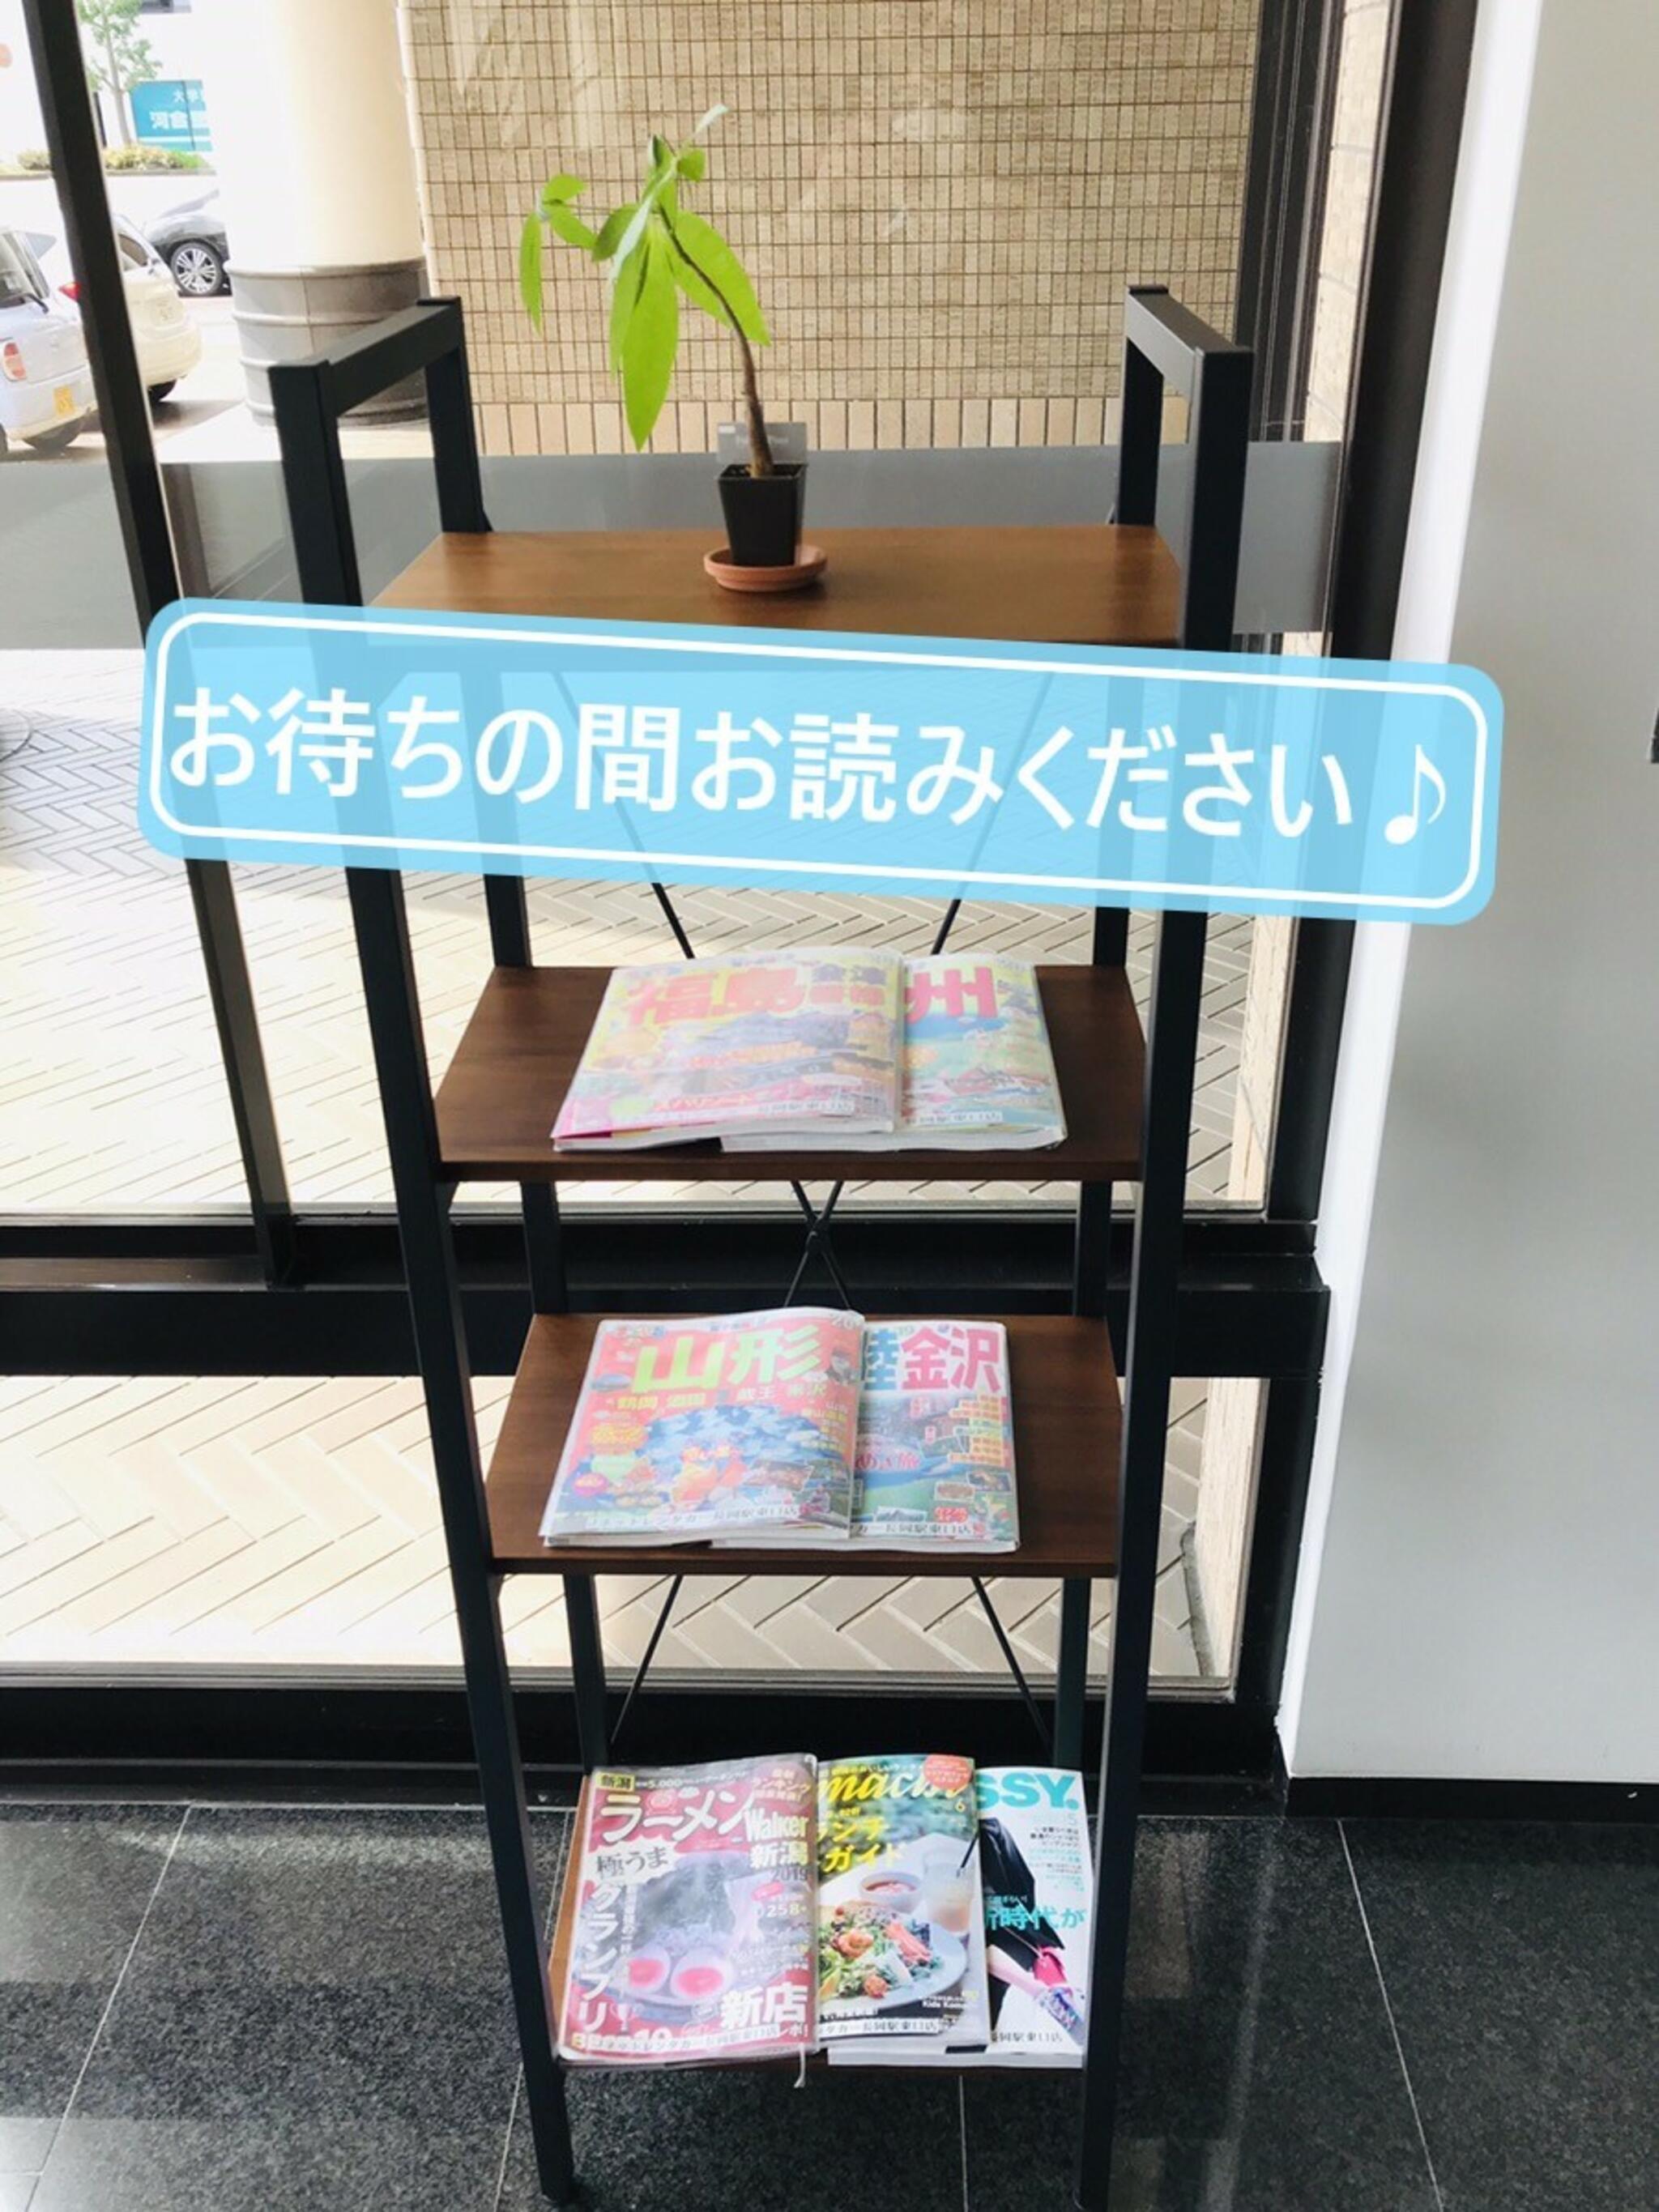 Jネットレンタカー長岡駅東口店の代表写真6